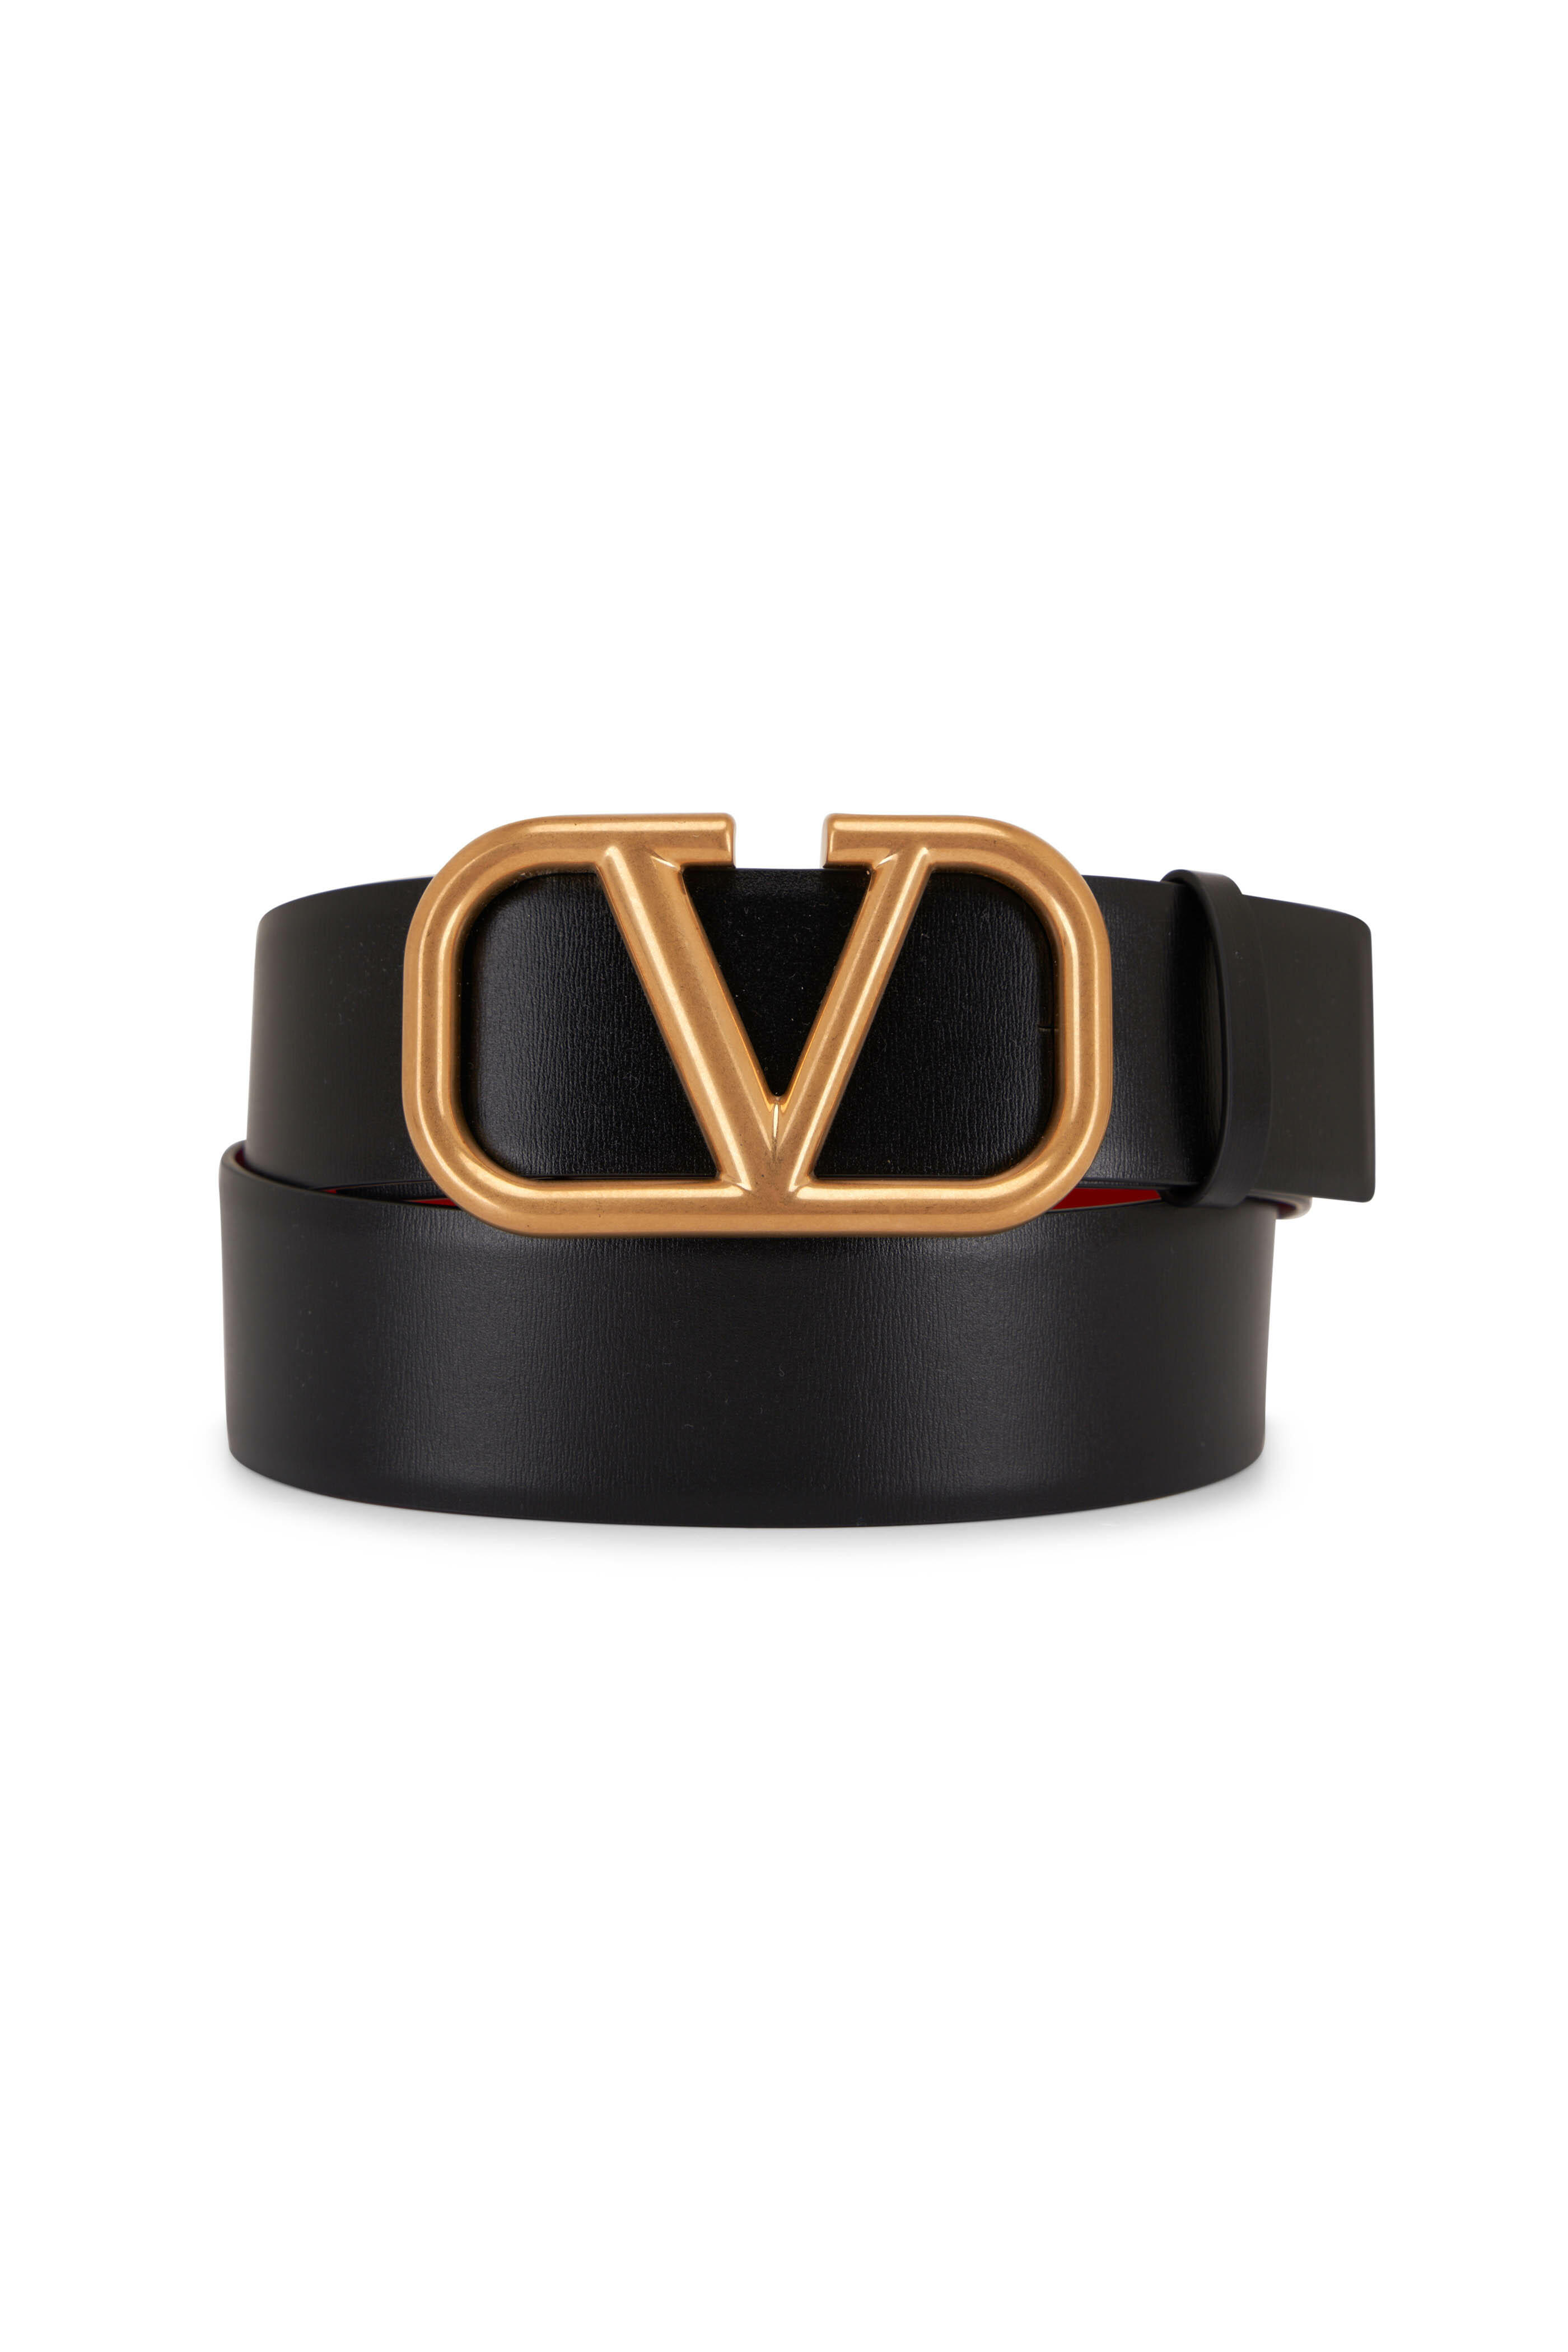 Valentino Garavani Women's Reversible Vlogo Leather Belt - Black Red - Size Small